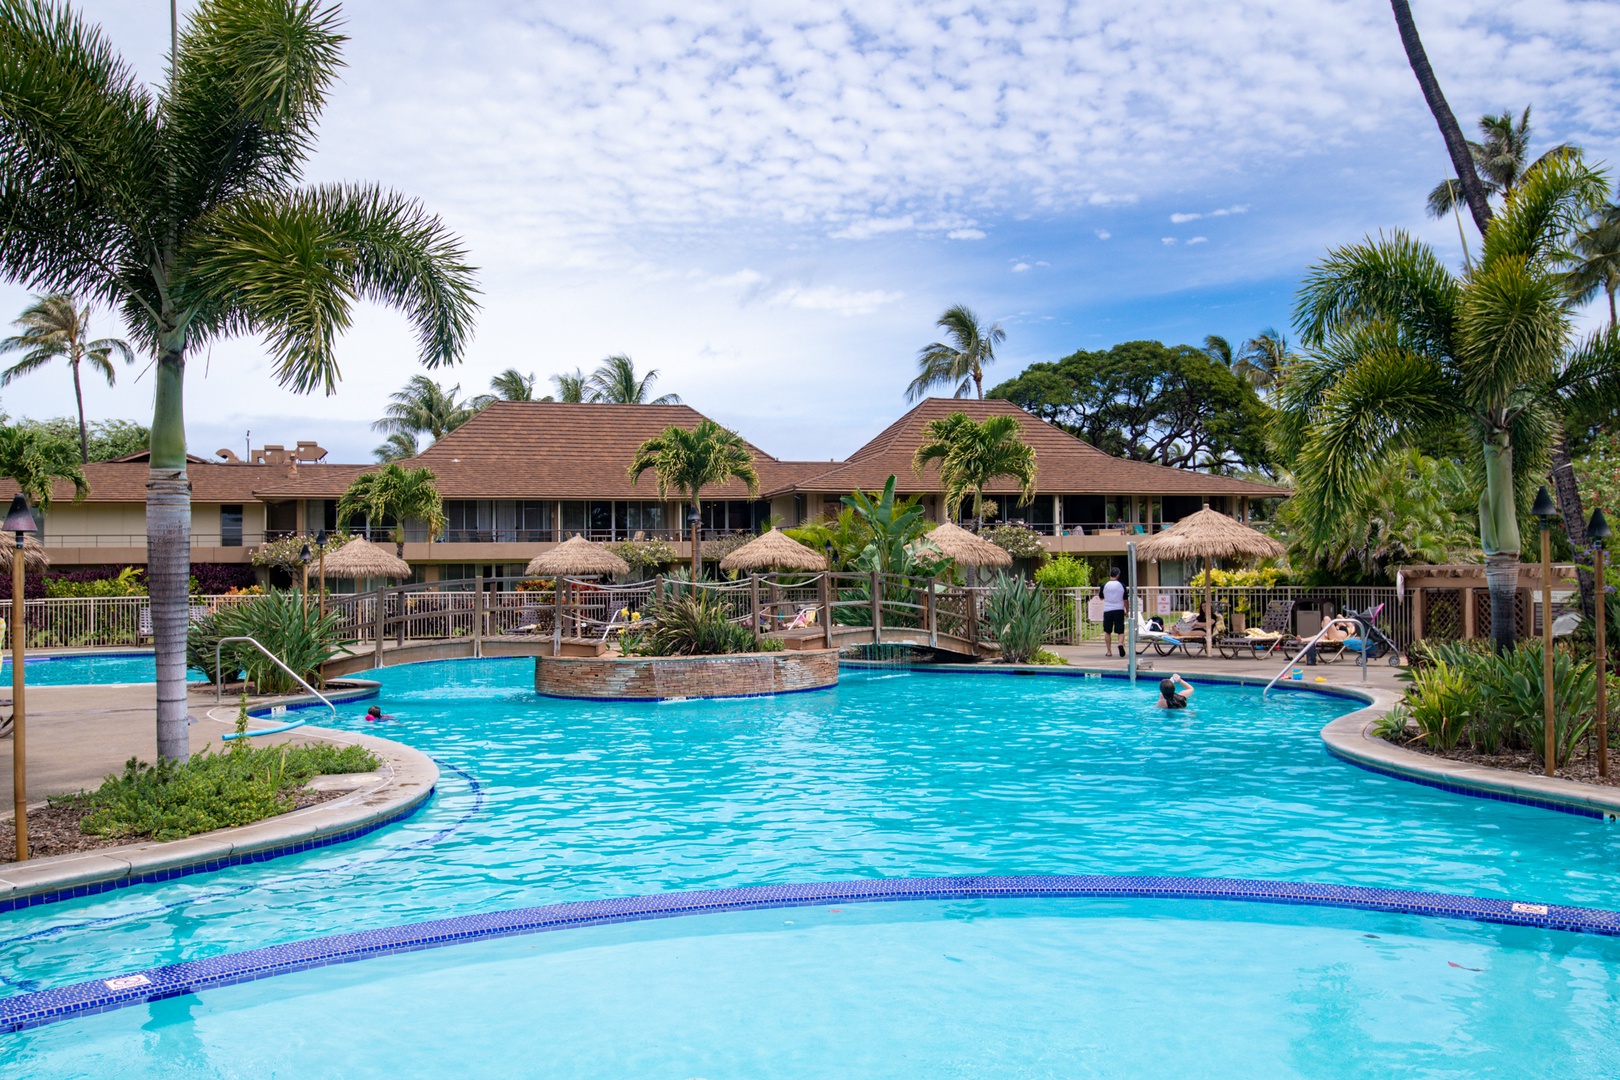 Lahaina Vacation Rentals, Maui Kaanapali Villas B225 - Relax in the pool or under the tiki huts